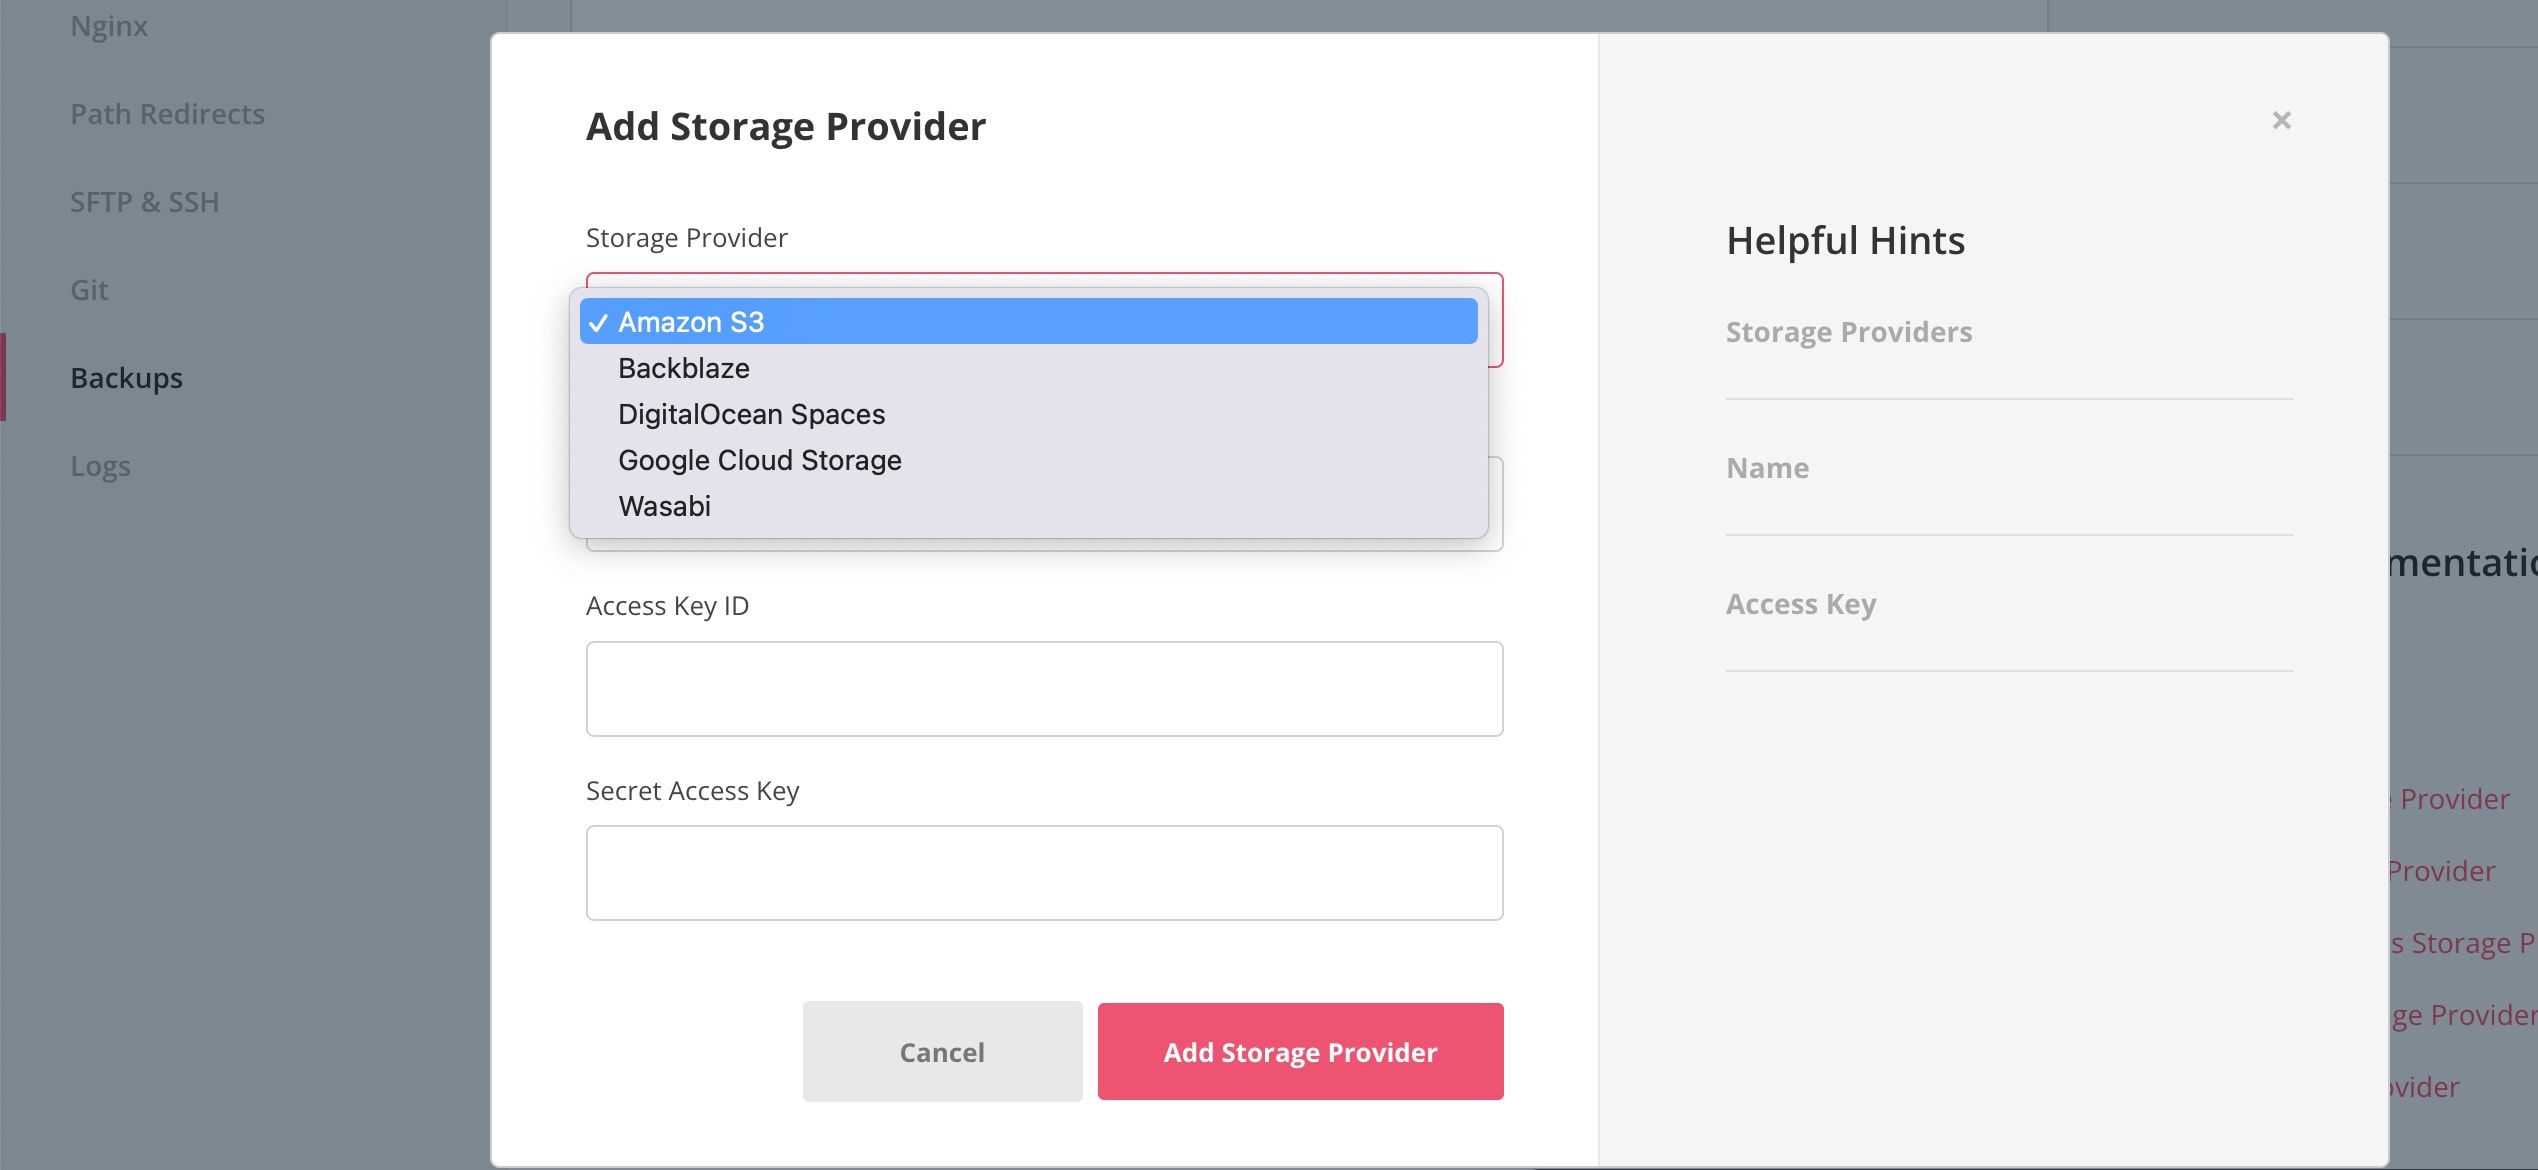 storage provider for backups